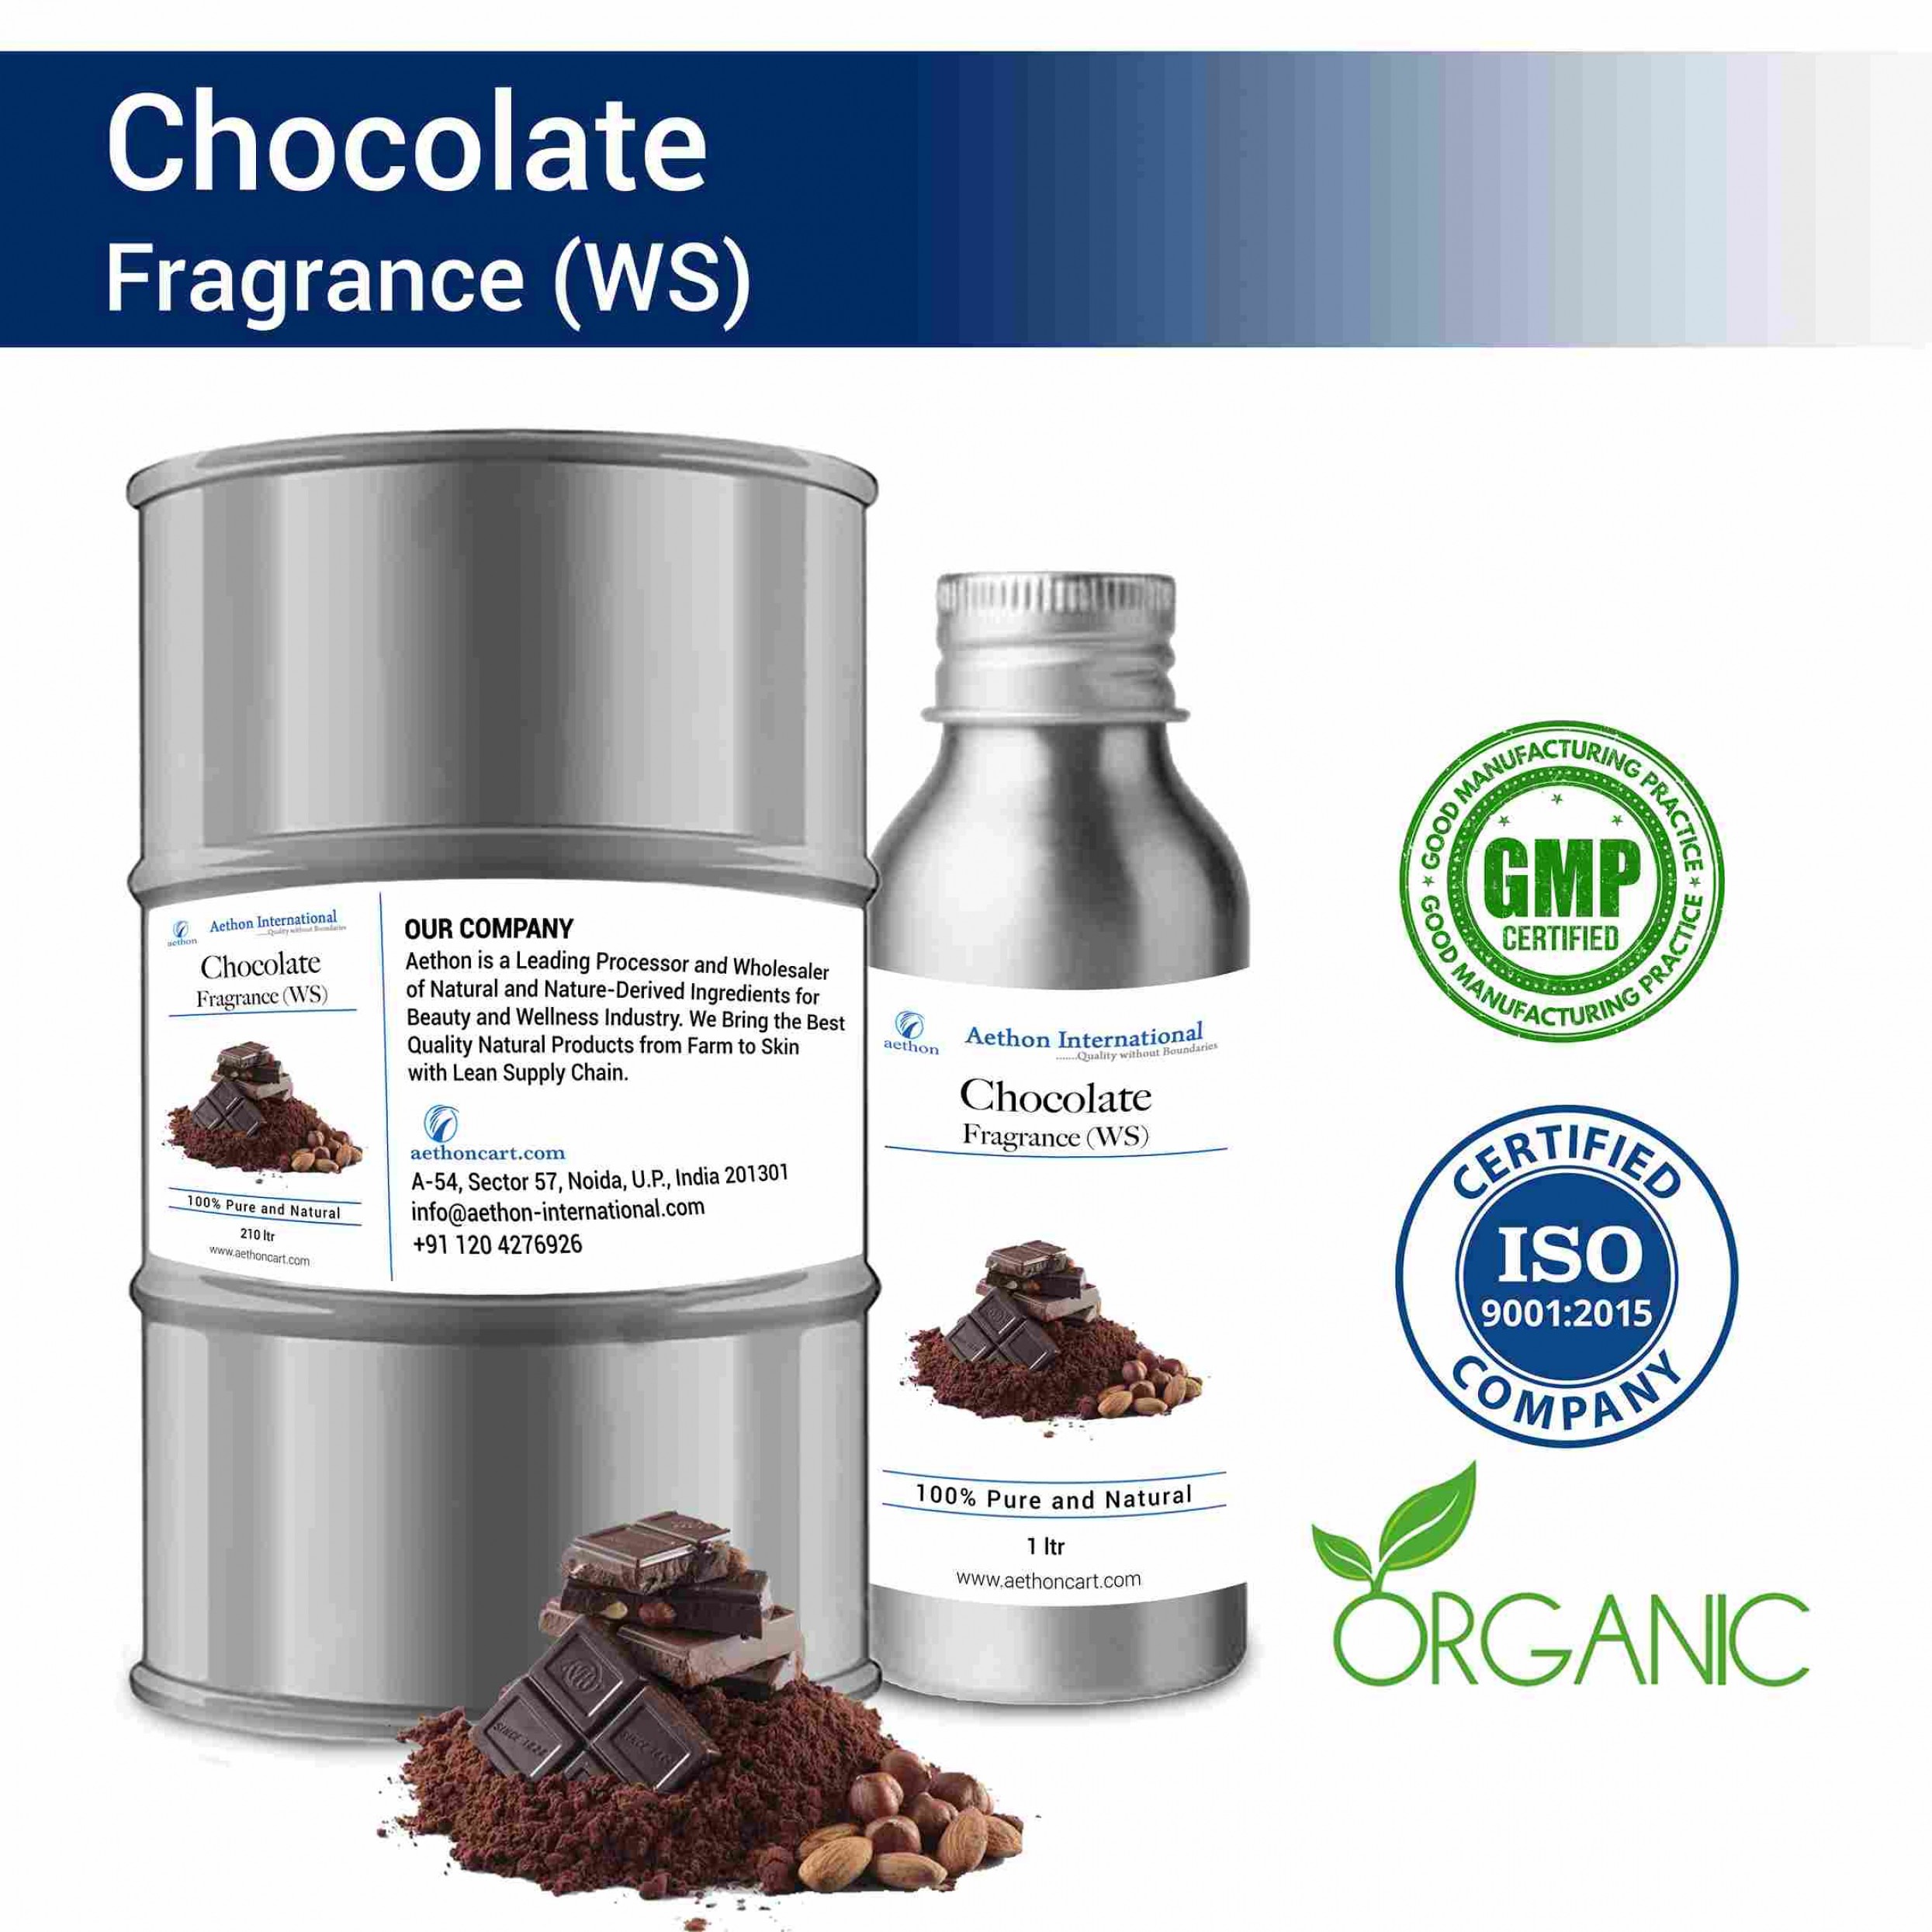 Chocolate Fragrance (WS)